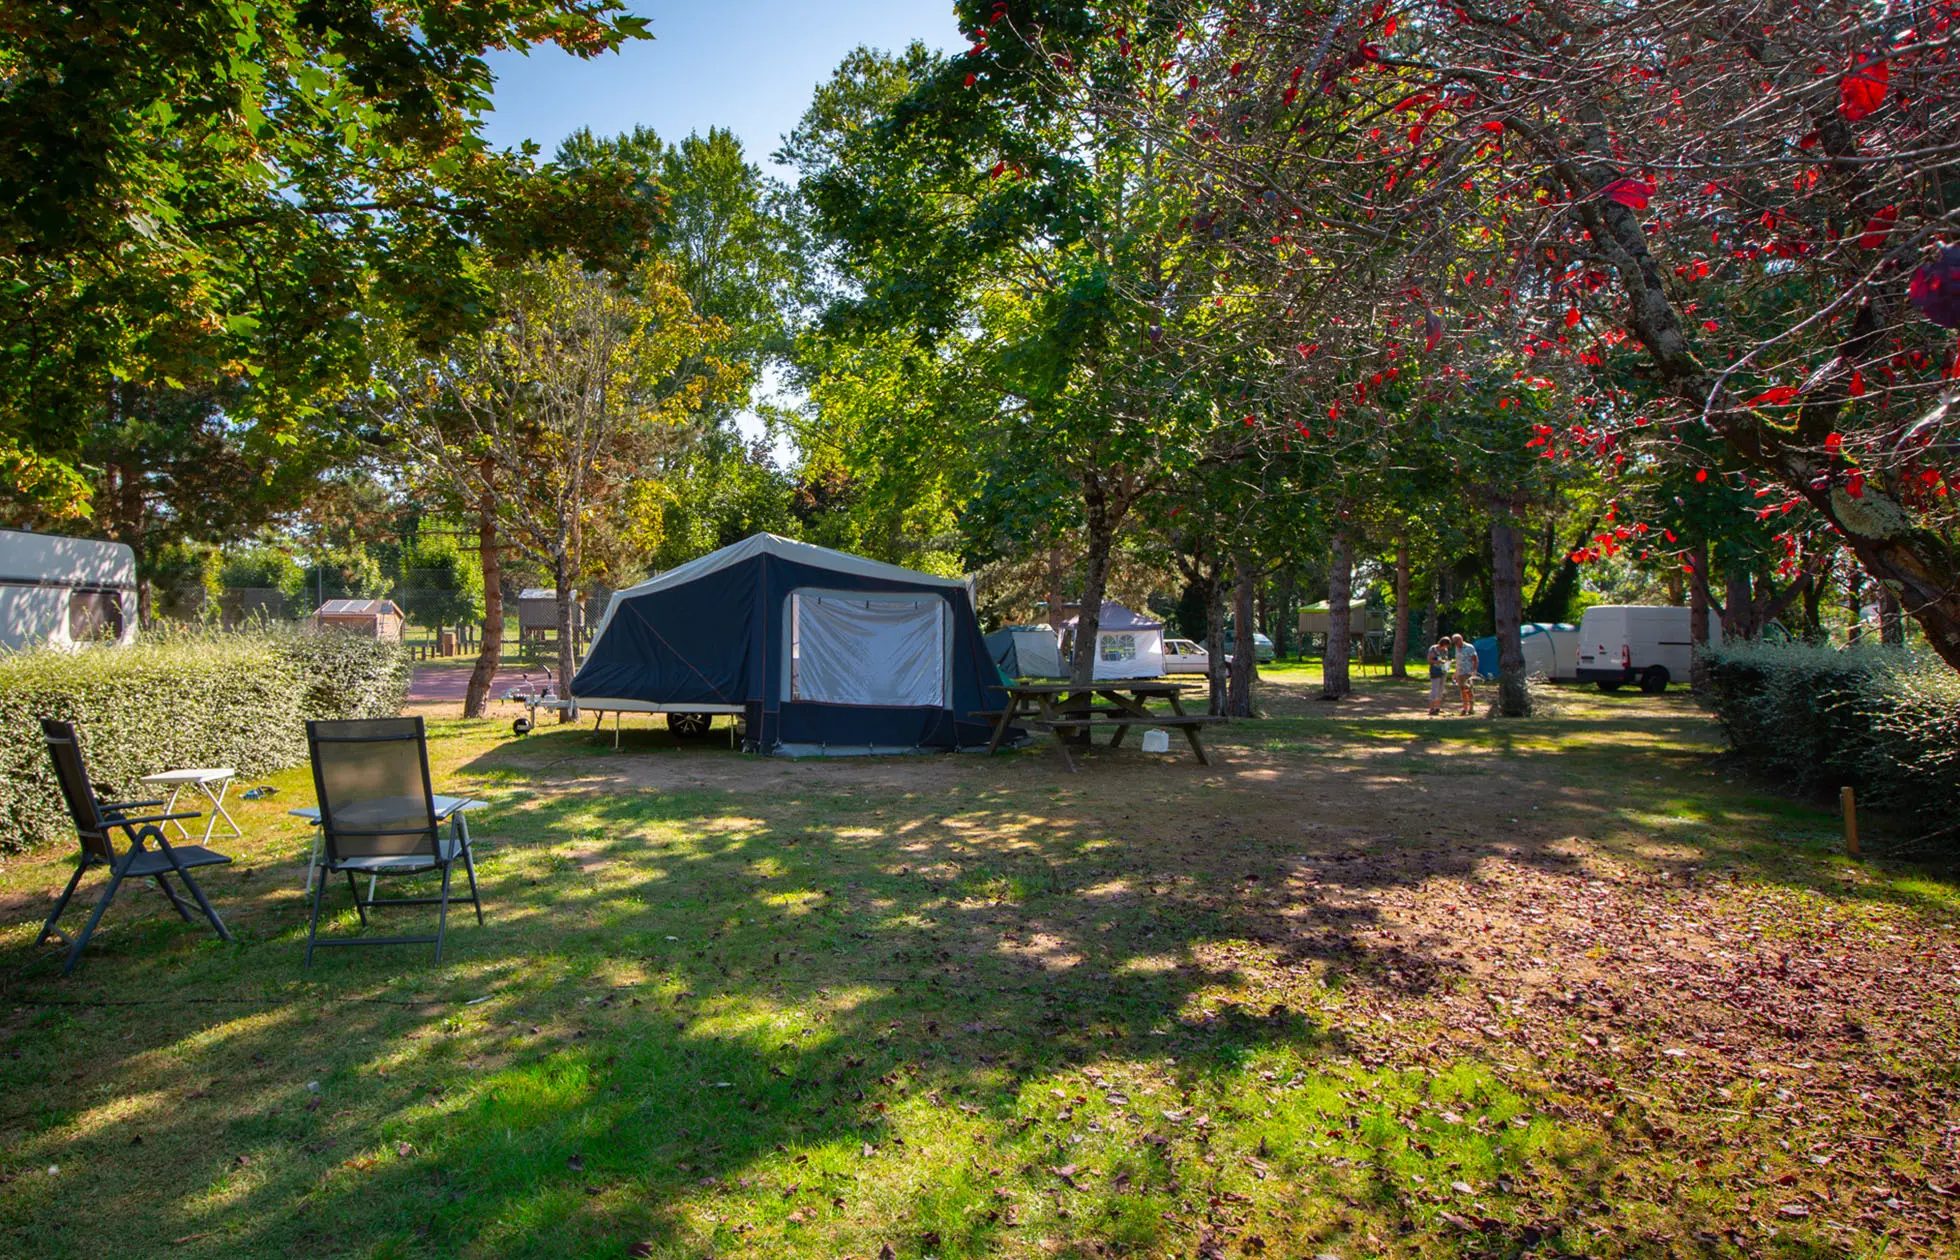 offer ' - '15 - Camping Le Jardin de Sully - Hébergement